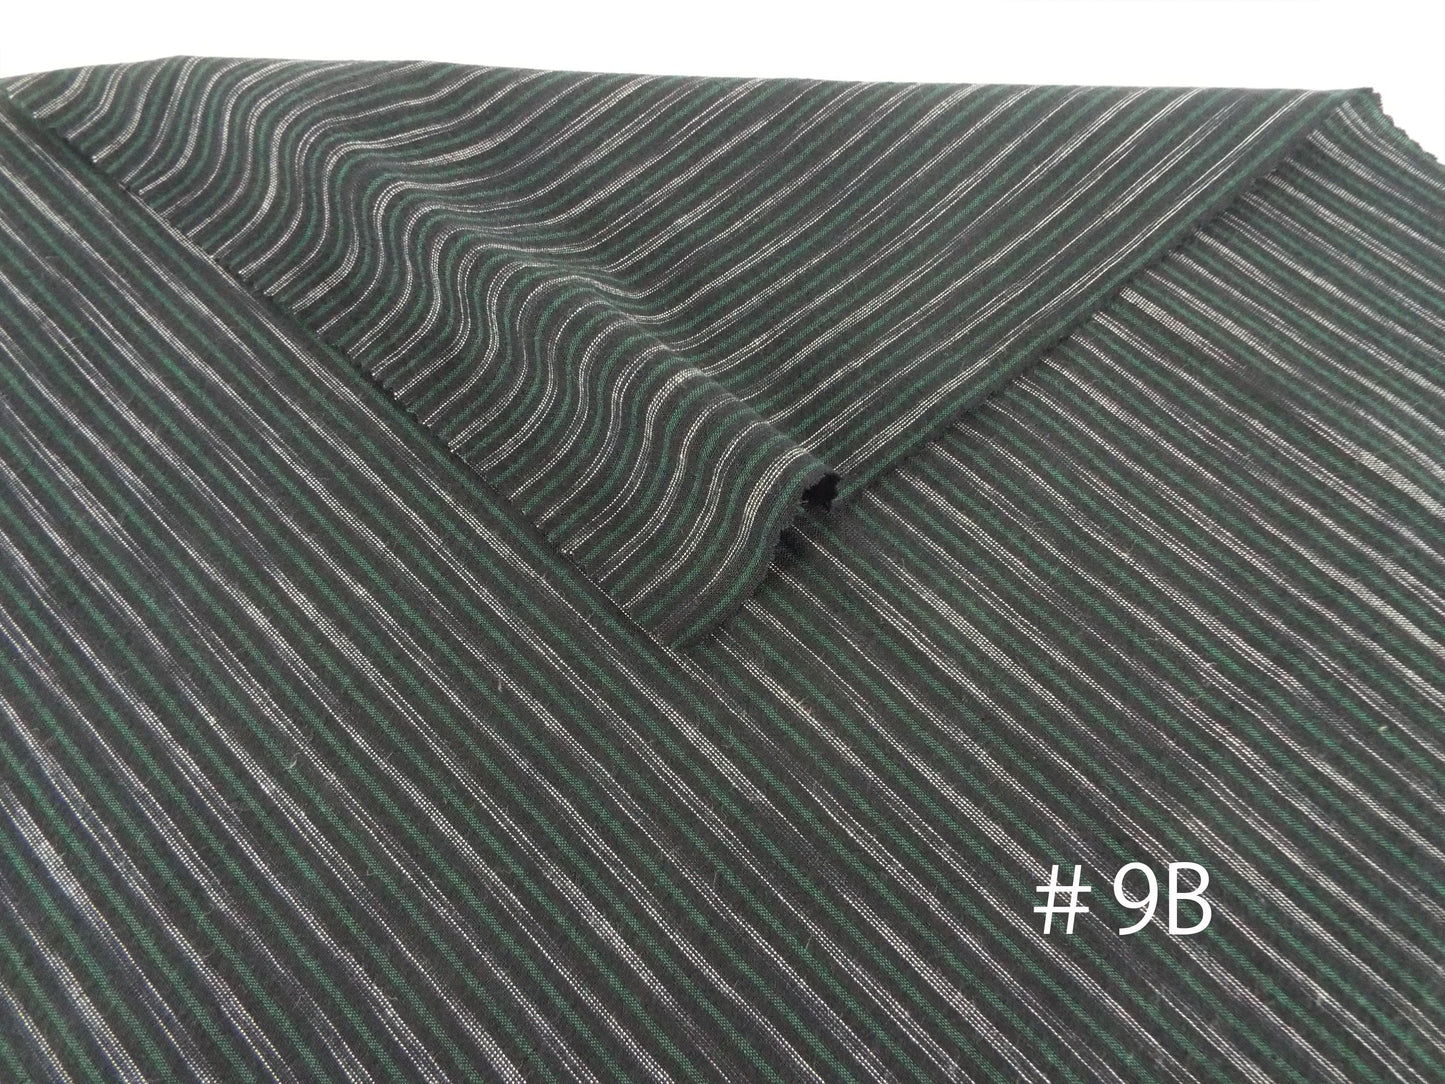 Kameda striped cotton fabric ordinary ground # 9 ABC 3 patterns